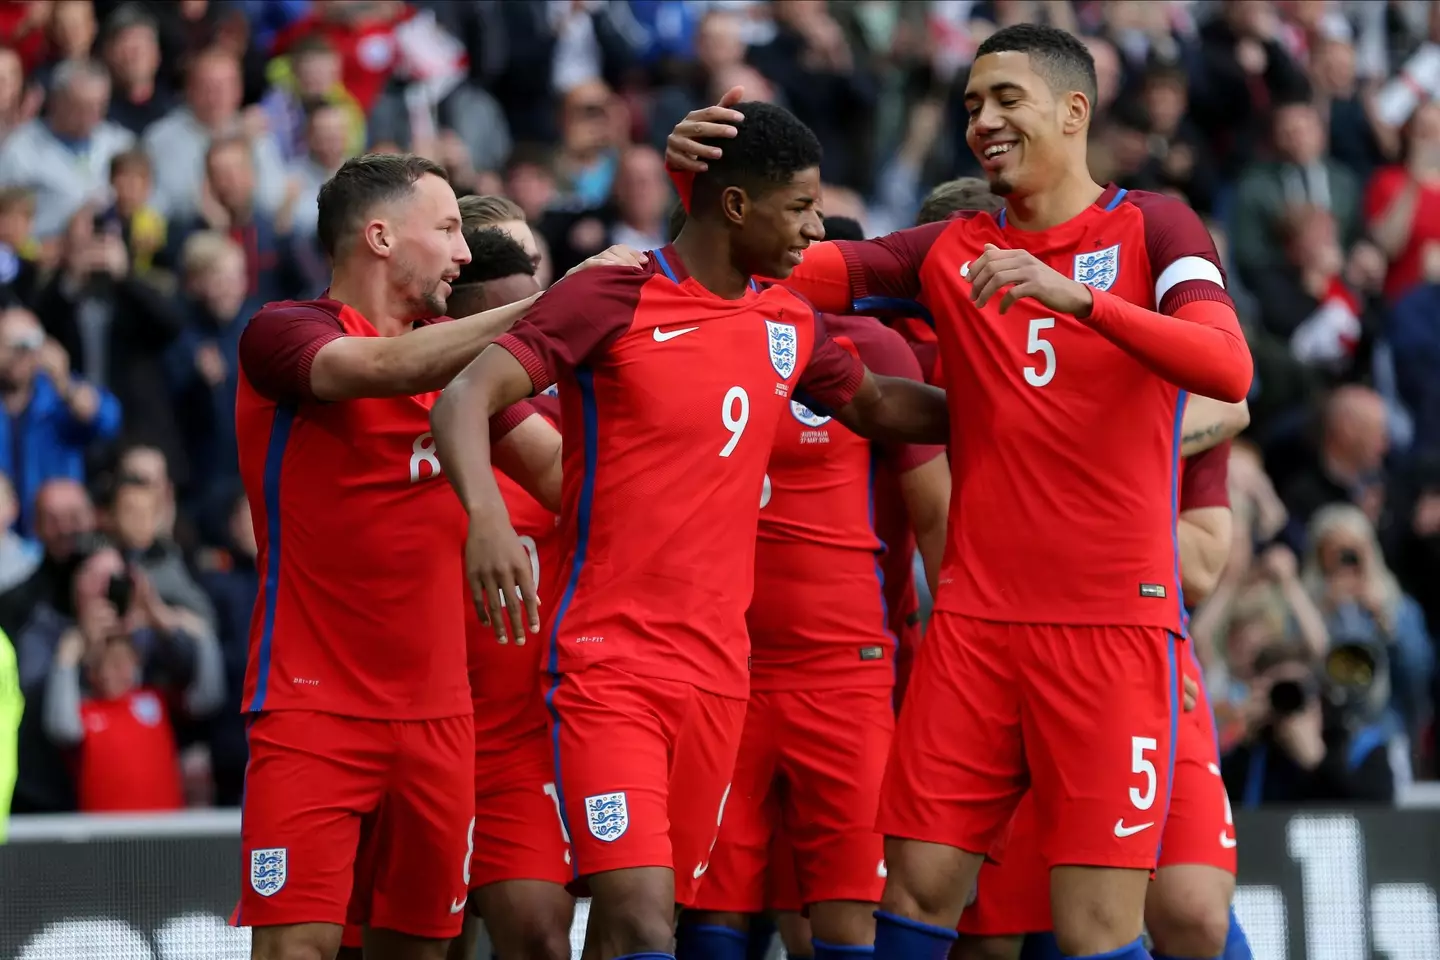 Marcus Rashford celebrating after scoring on his England debut in 2016. Image